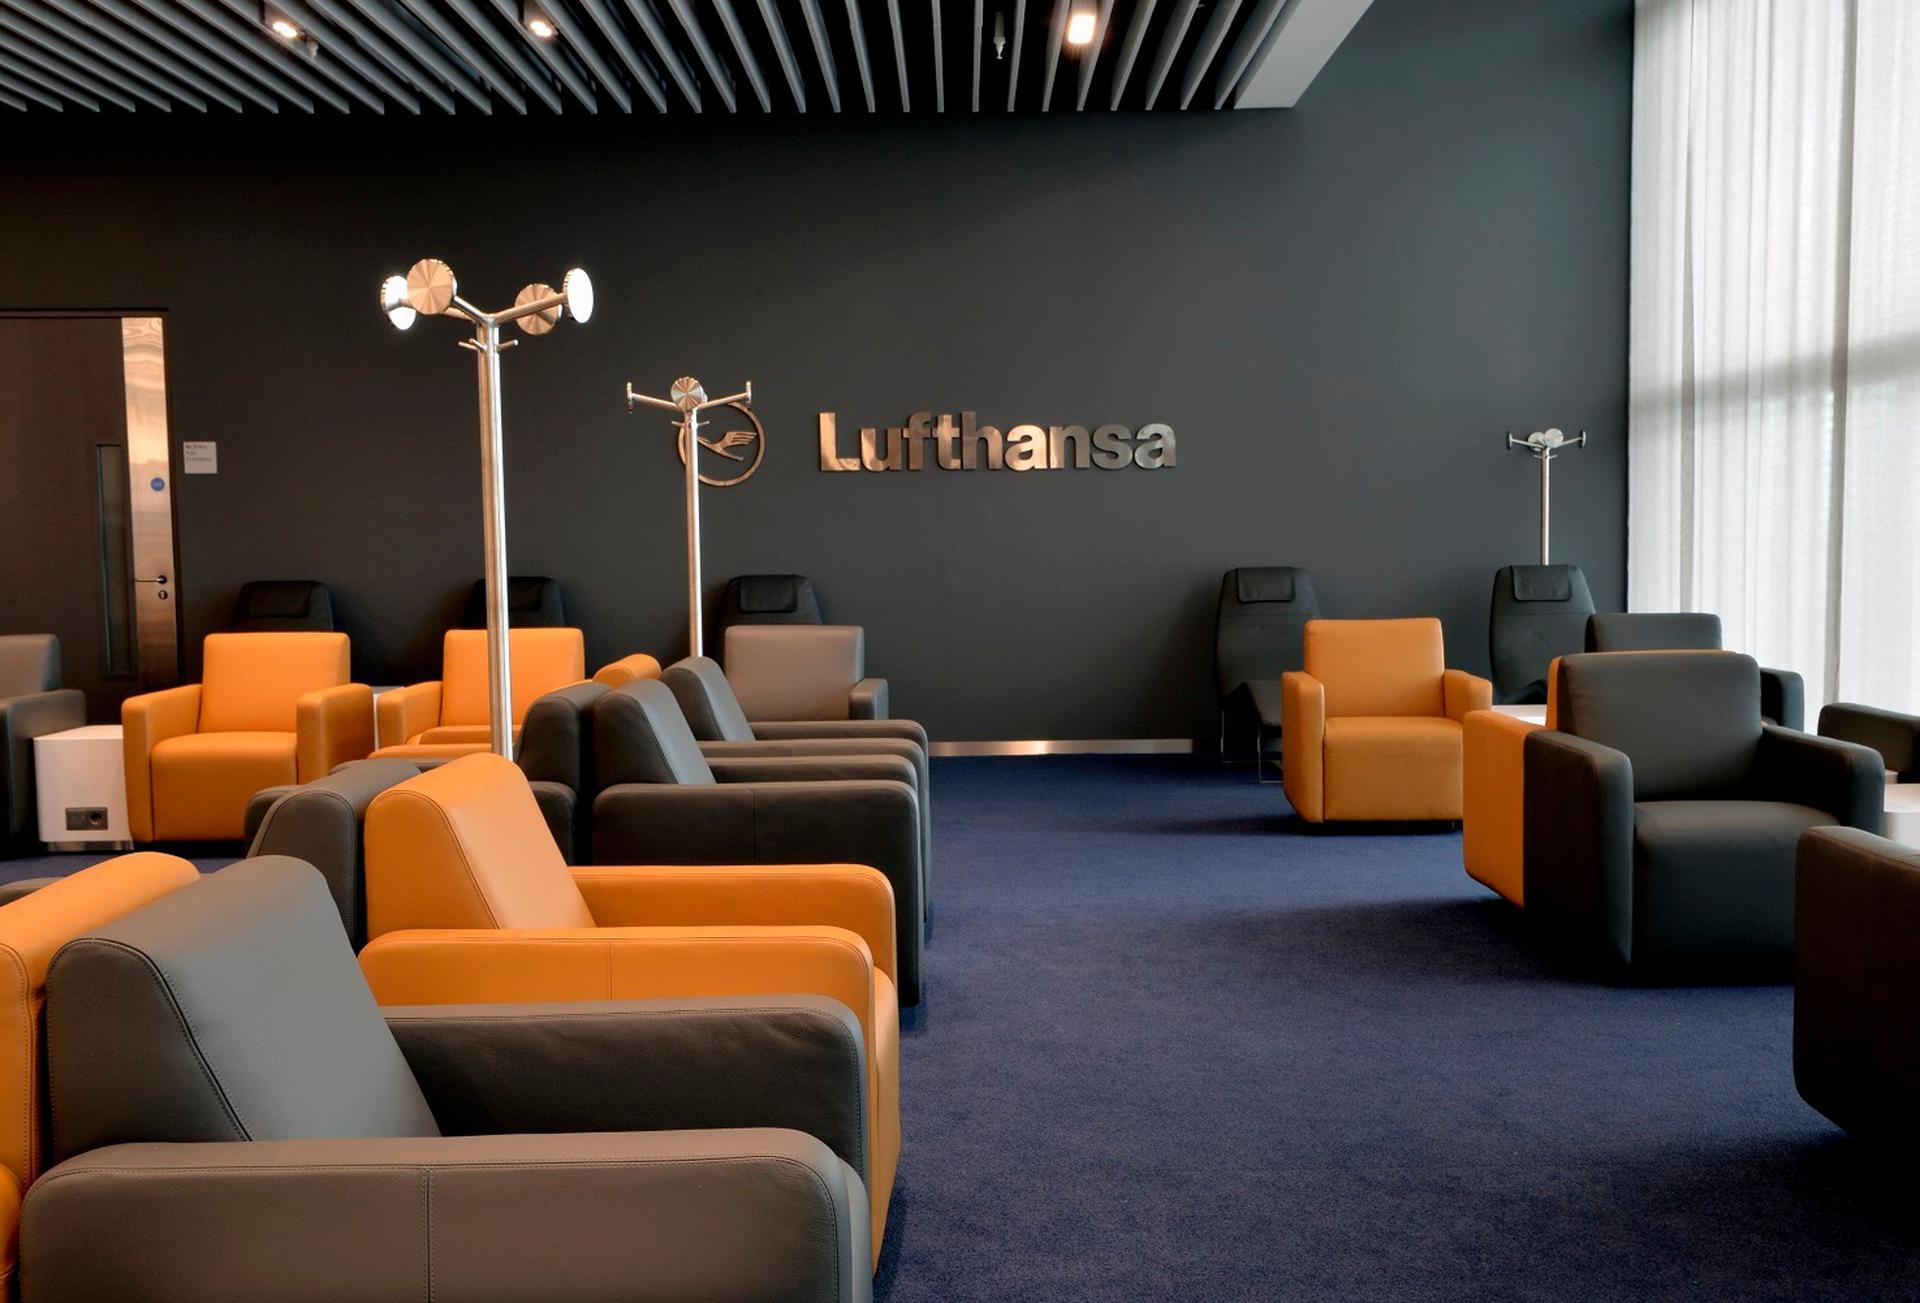 Lufthansa Business Lounge image 19 of 19